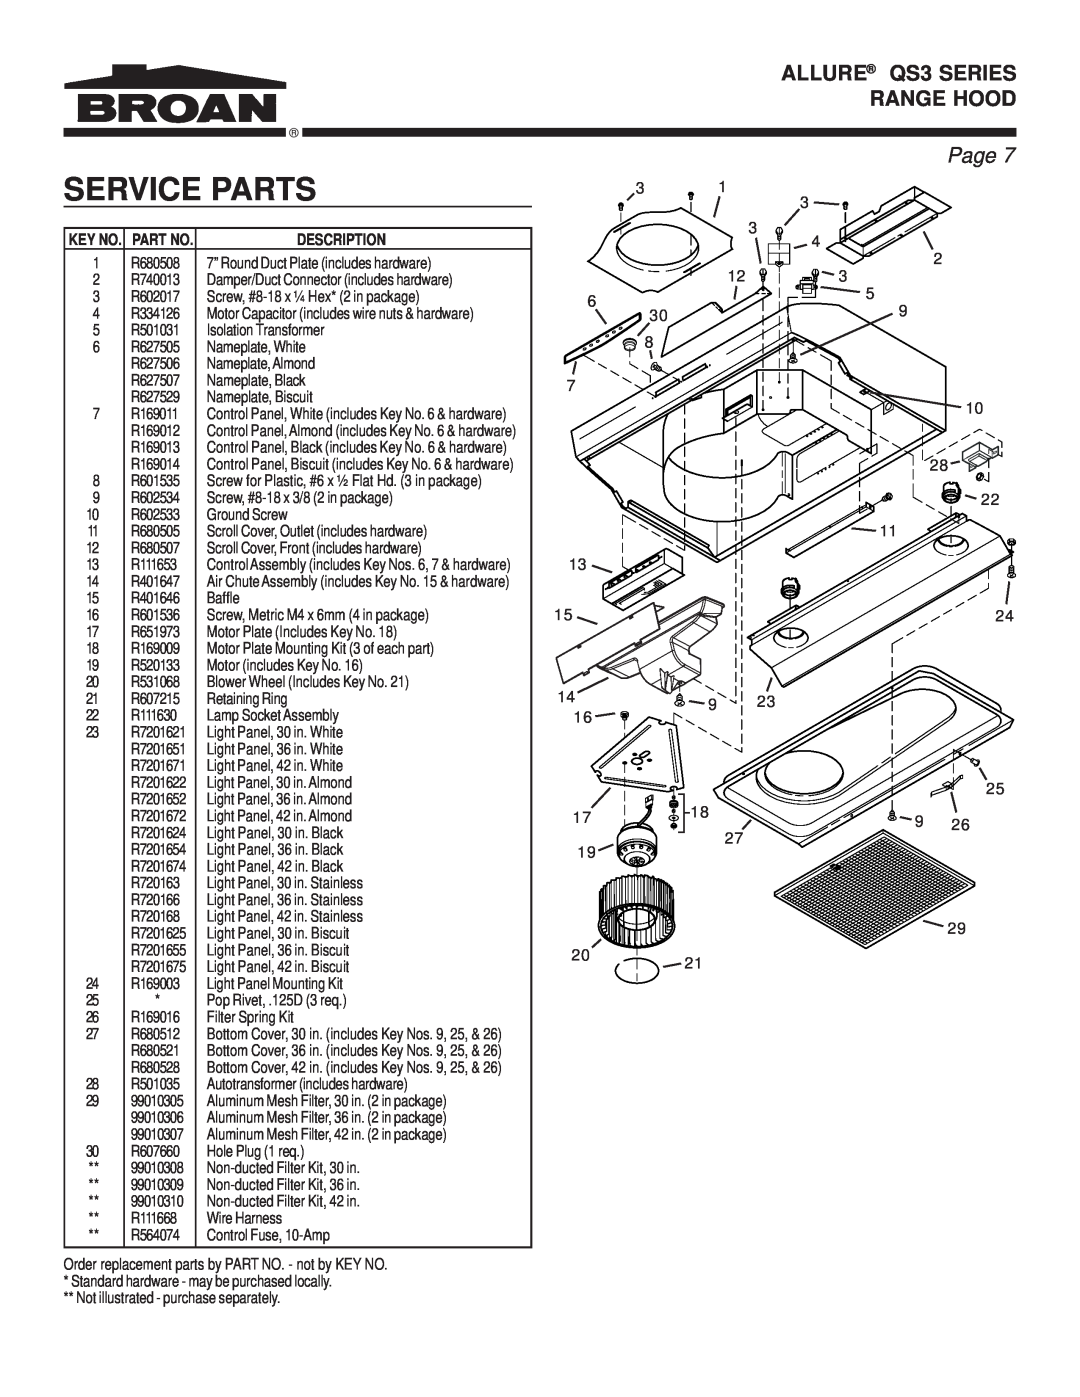 Broan warranty Service Parts, ALLURE QS3 SERIES RANGE HOOD, Page, Key No. Part No 